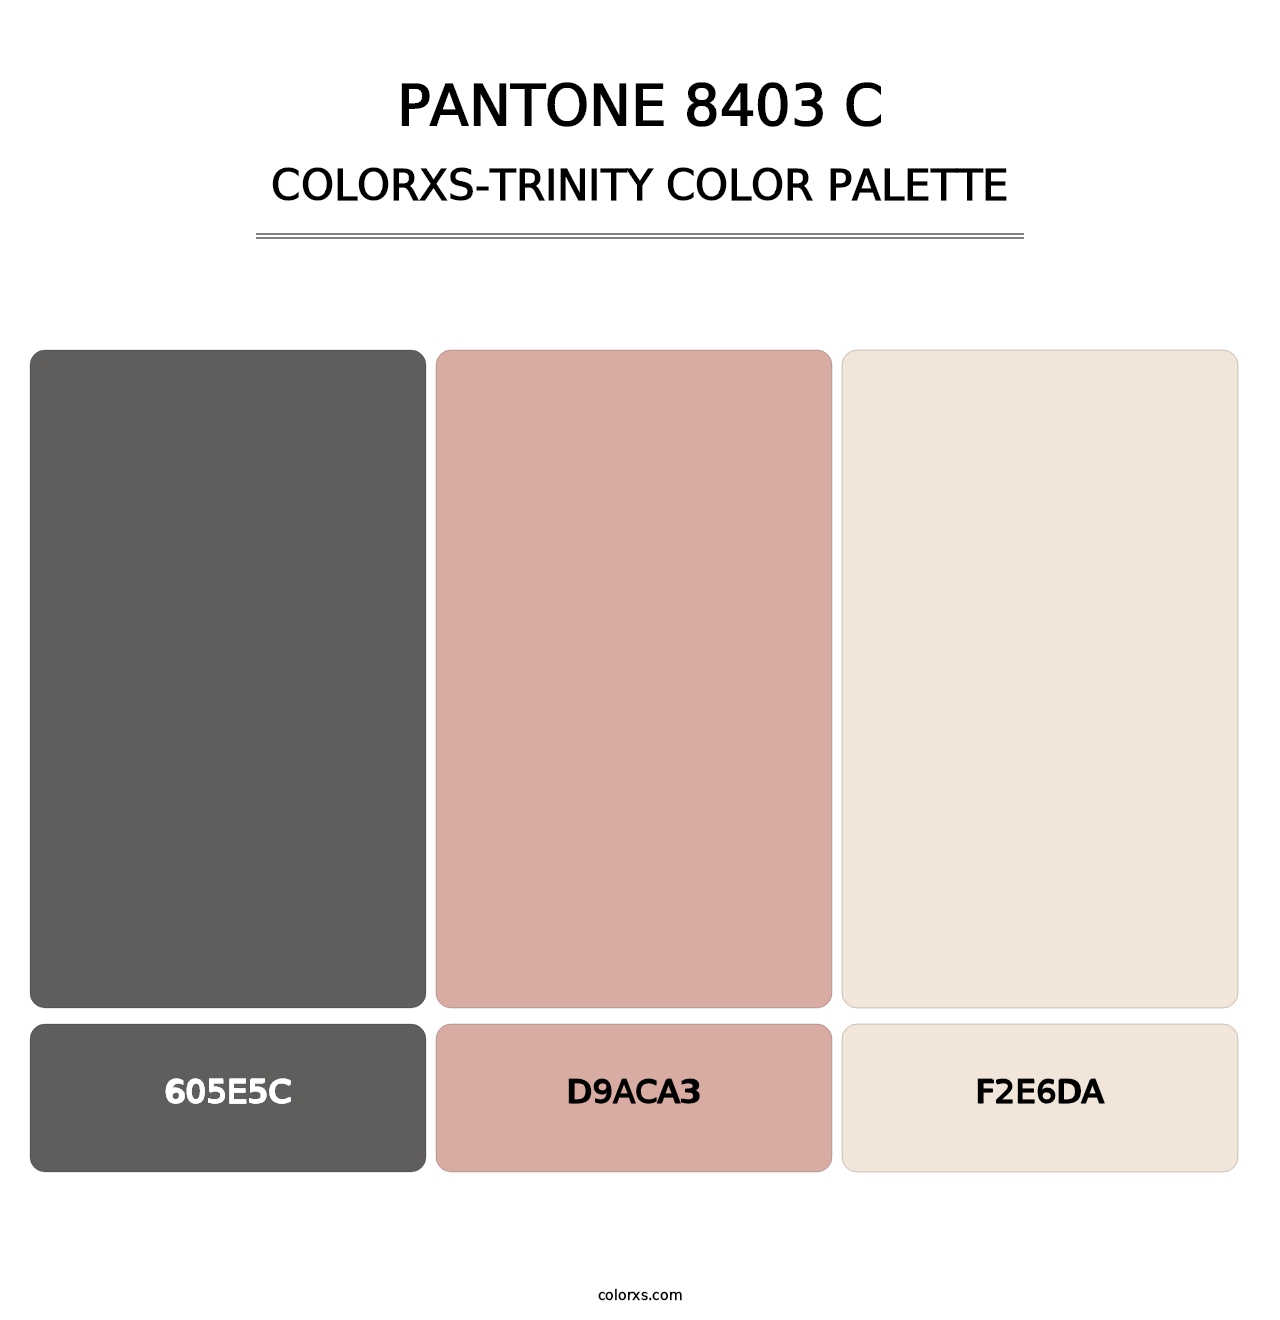 PANTONE 8403 C - Colorxs Trinity Palette